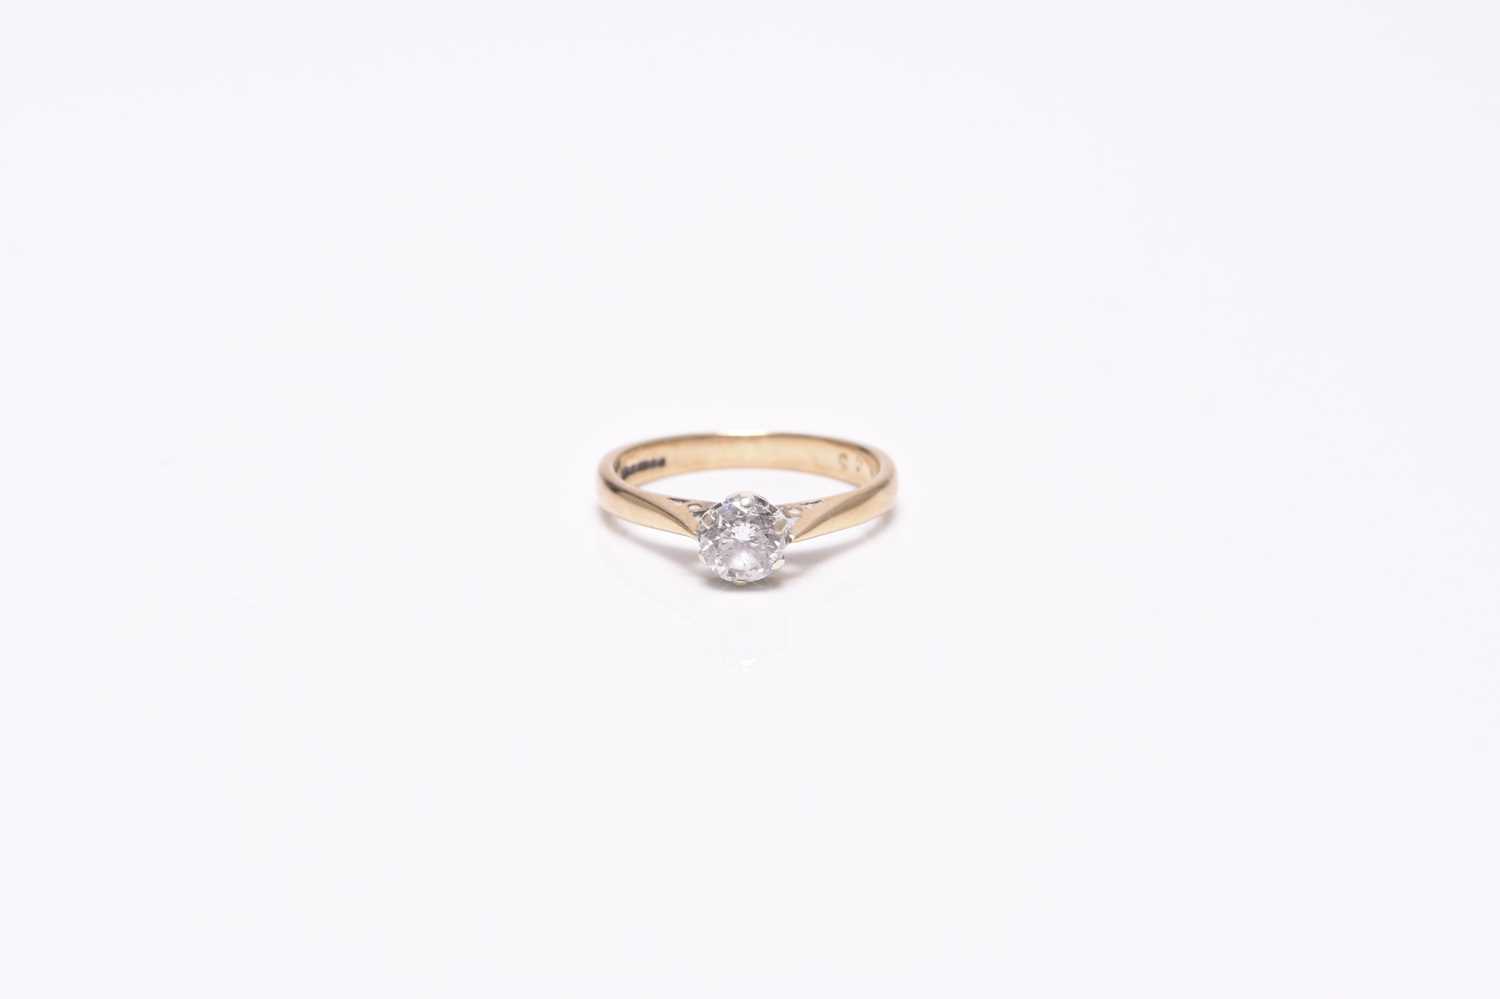 A 9ct gold single stone diamond ring - Image 3 of 3